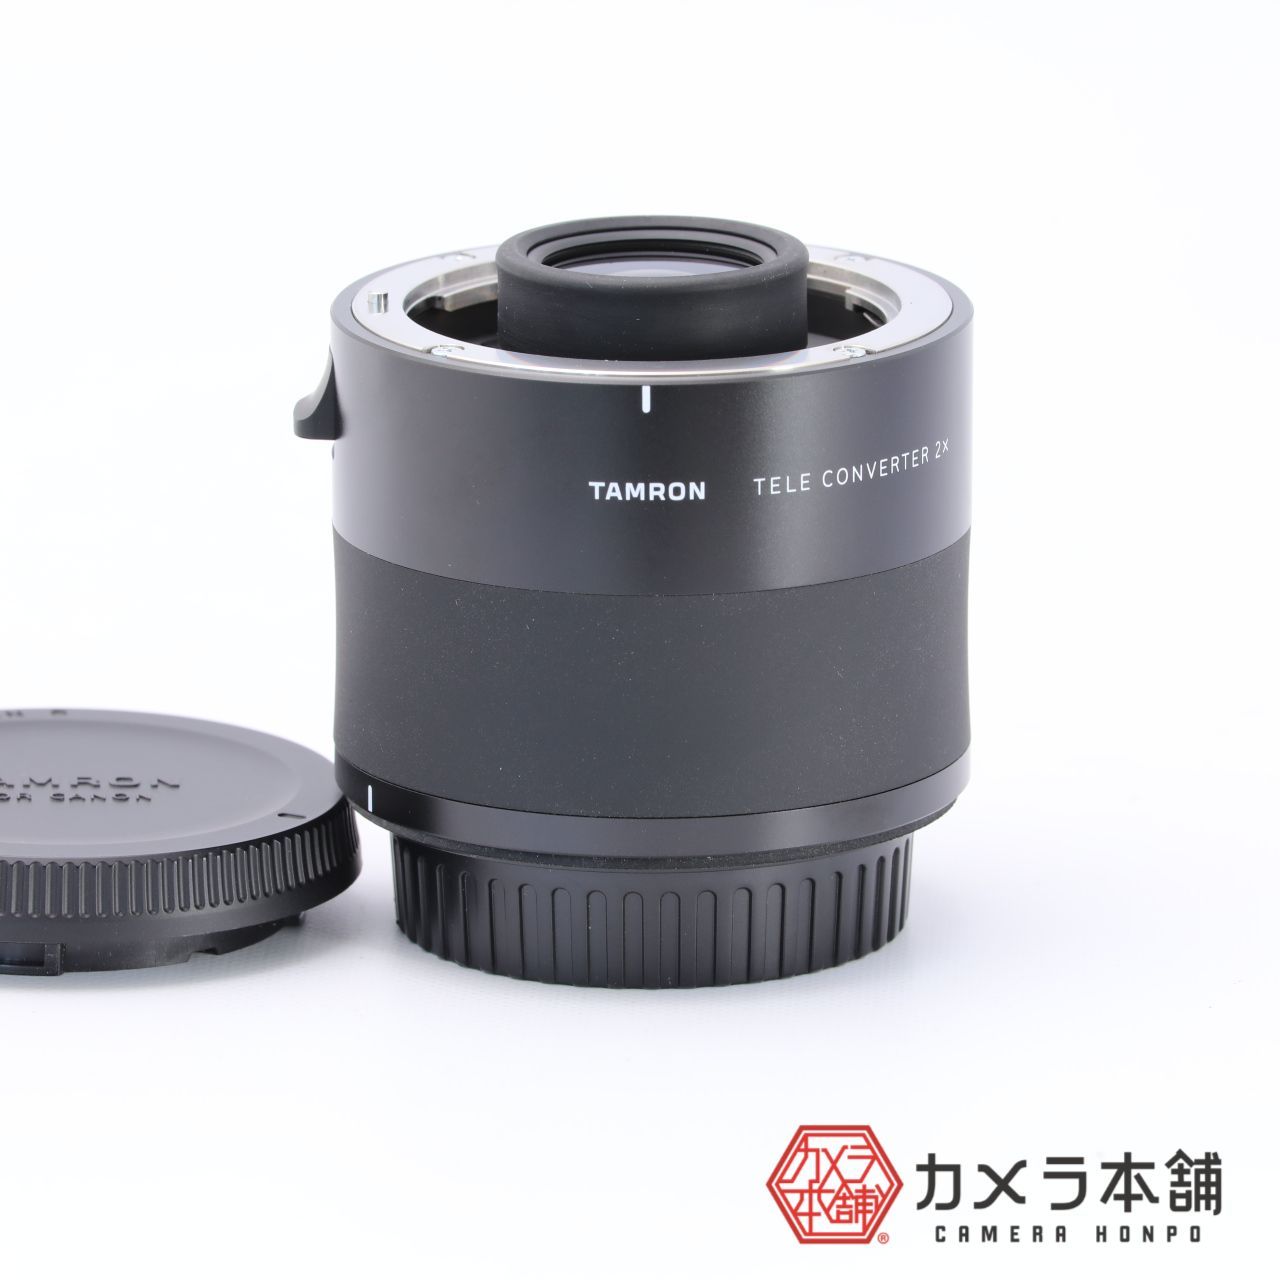 TAMRON TELE CONVERTER 2.0x キヤノン用 TC-X20 カメラ本舗｜Camera honpo メルカリ